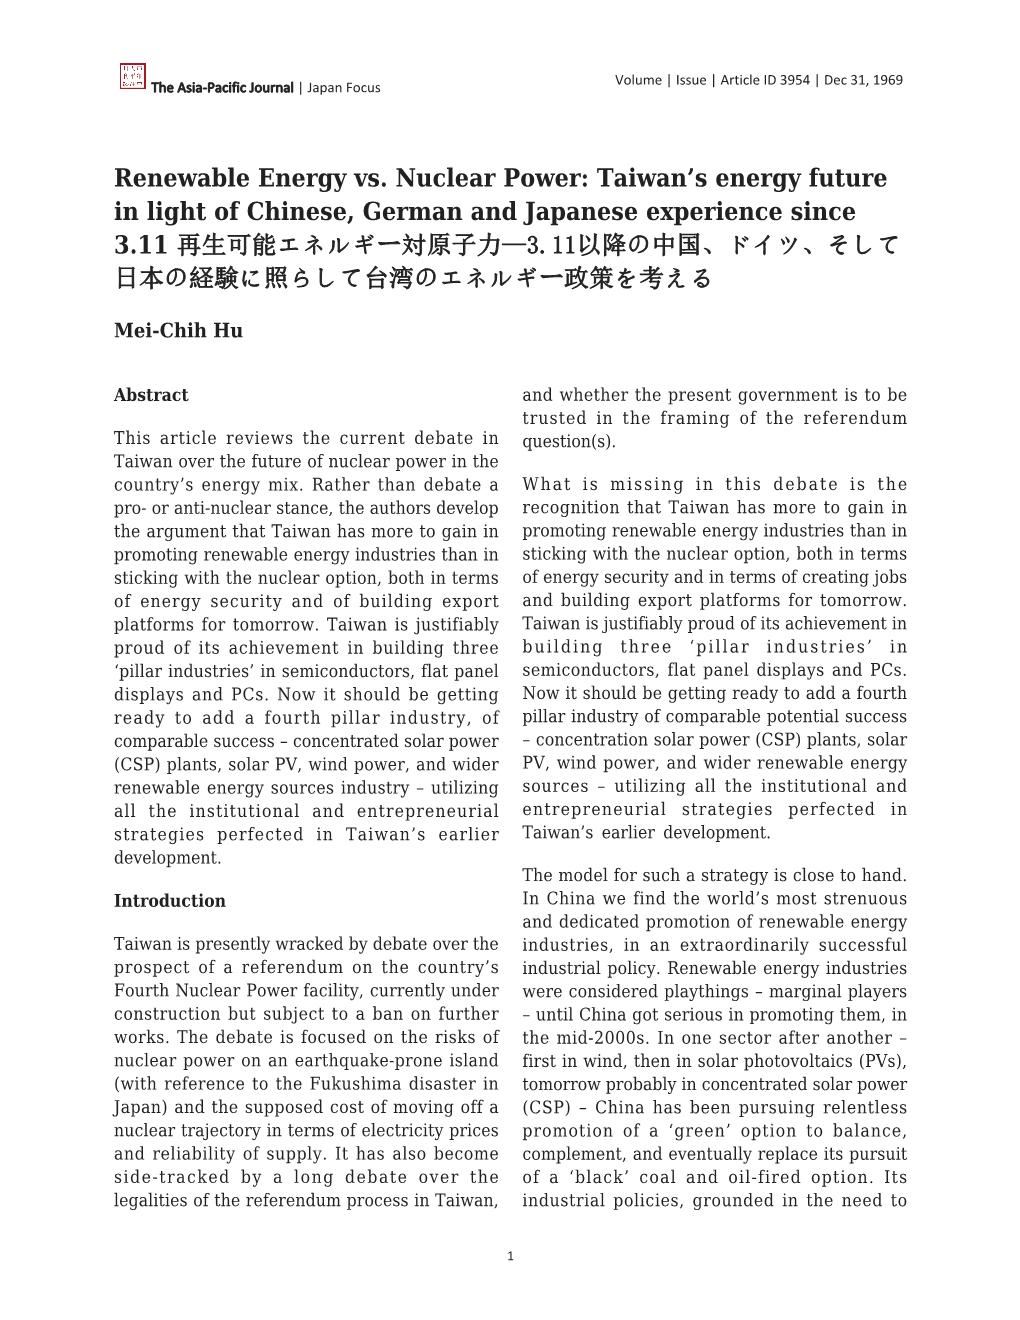 Renewable Energy Vs. Nuclear Power